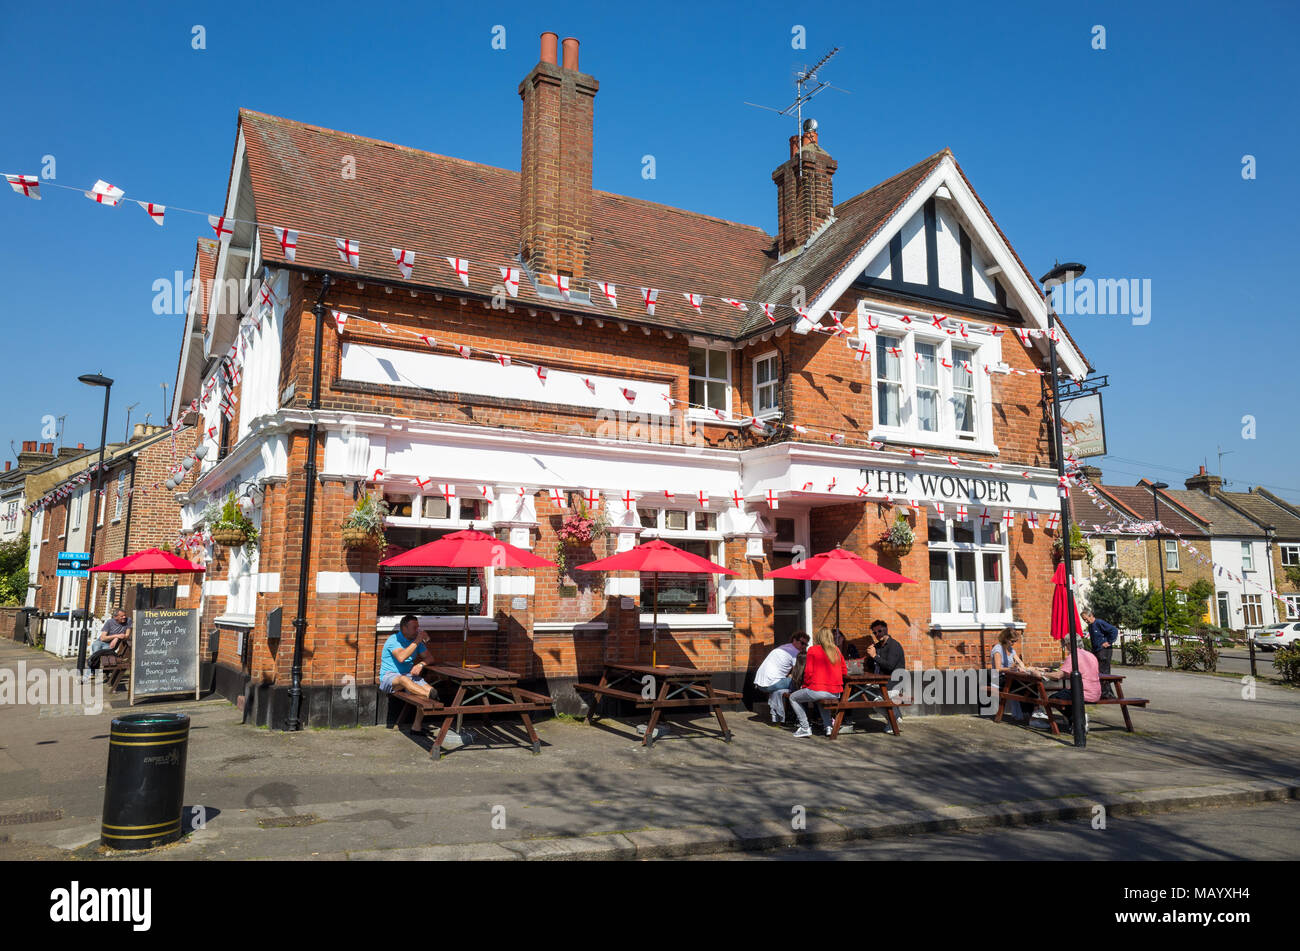 The Wonder pub, Enfield, London, UK Stock Photo